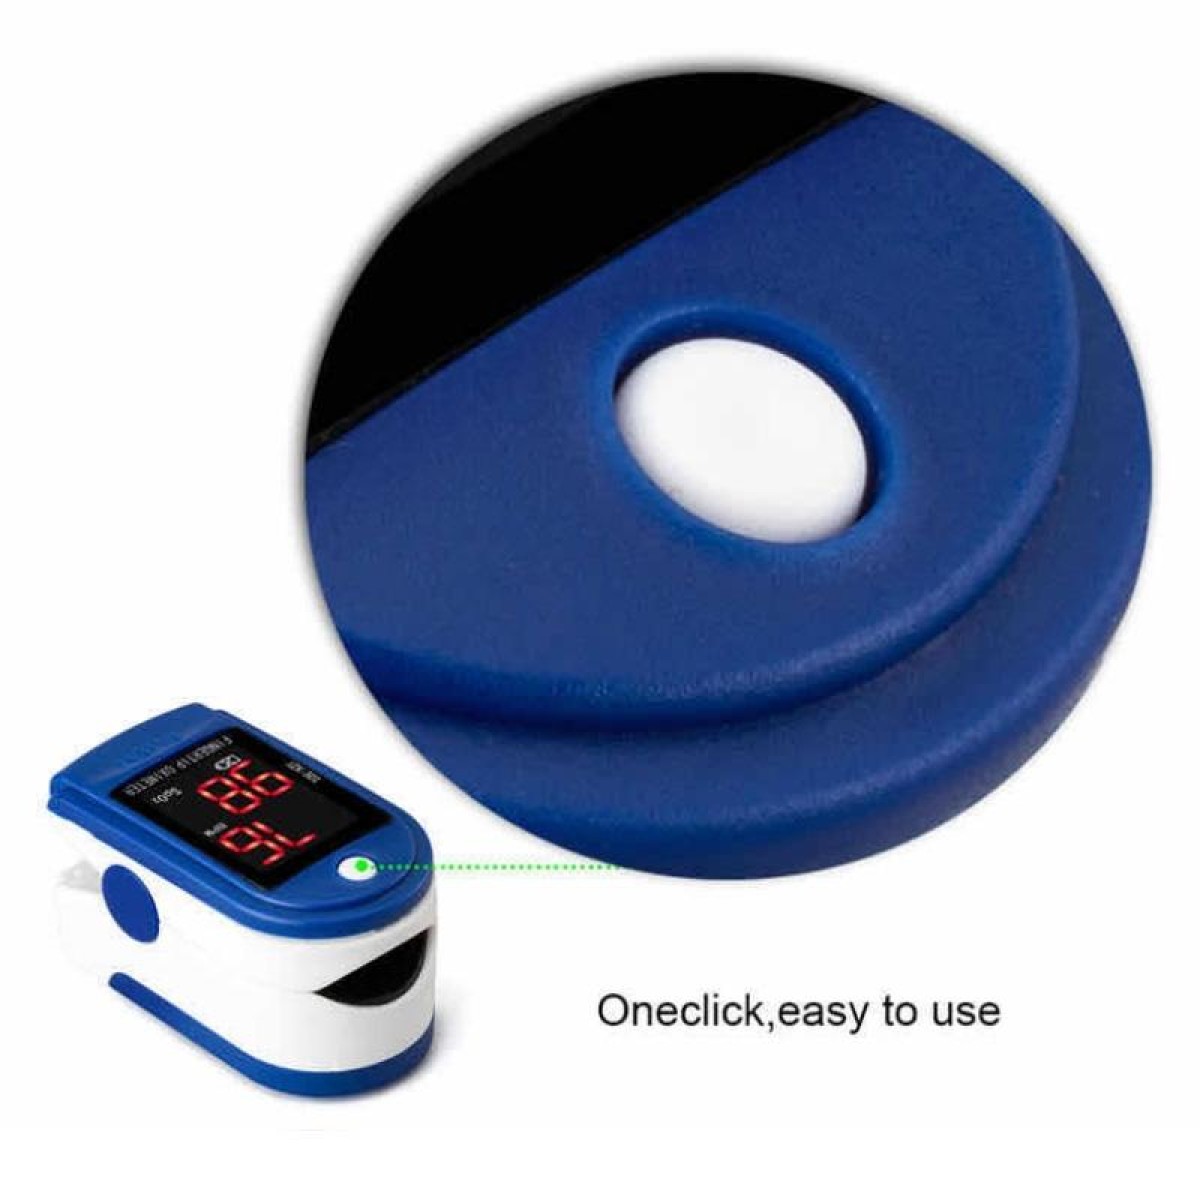 Precision Finger Pulse Oximeter Blood Oxygen Monitor(Black)